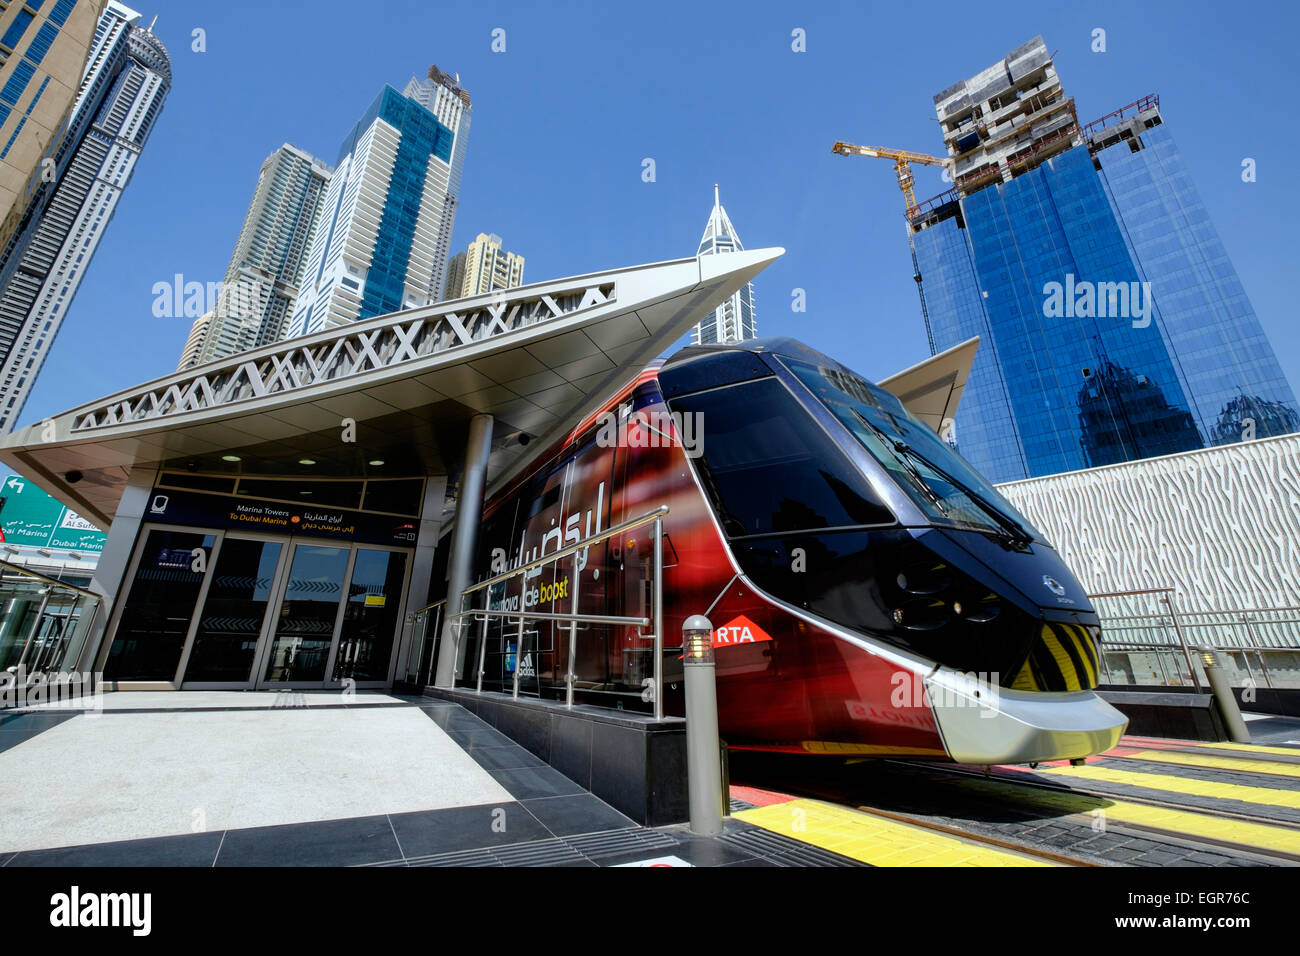 New Dubai tram at station in Marina district of New Dubai in United Arab Emirates Stock Photo